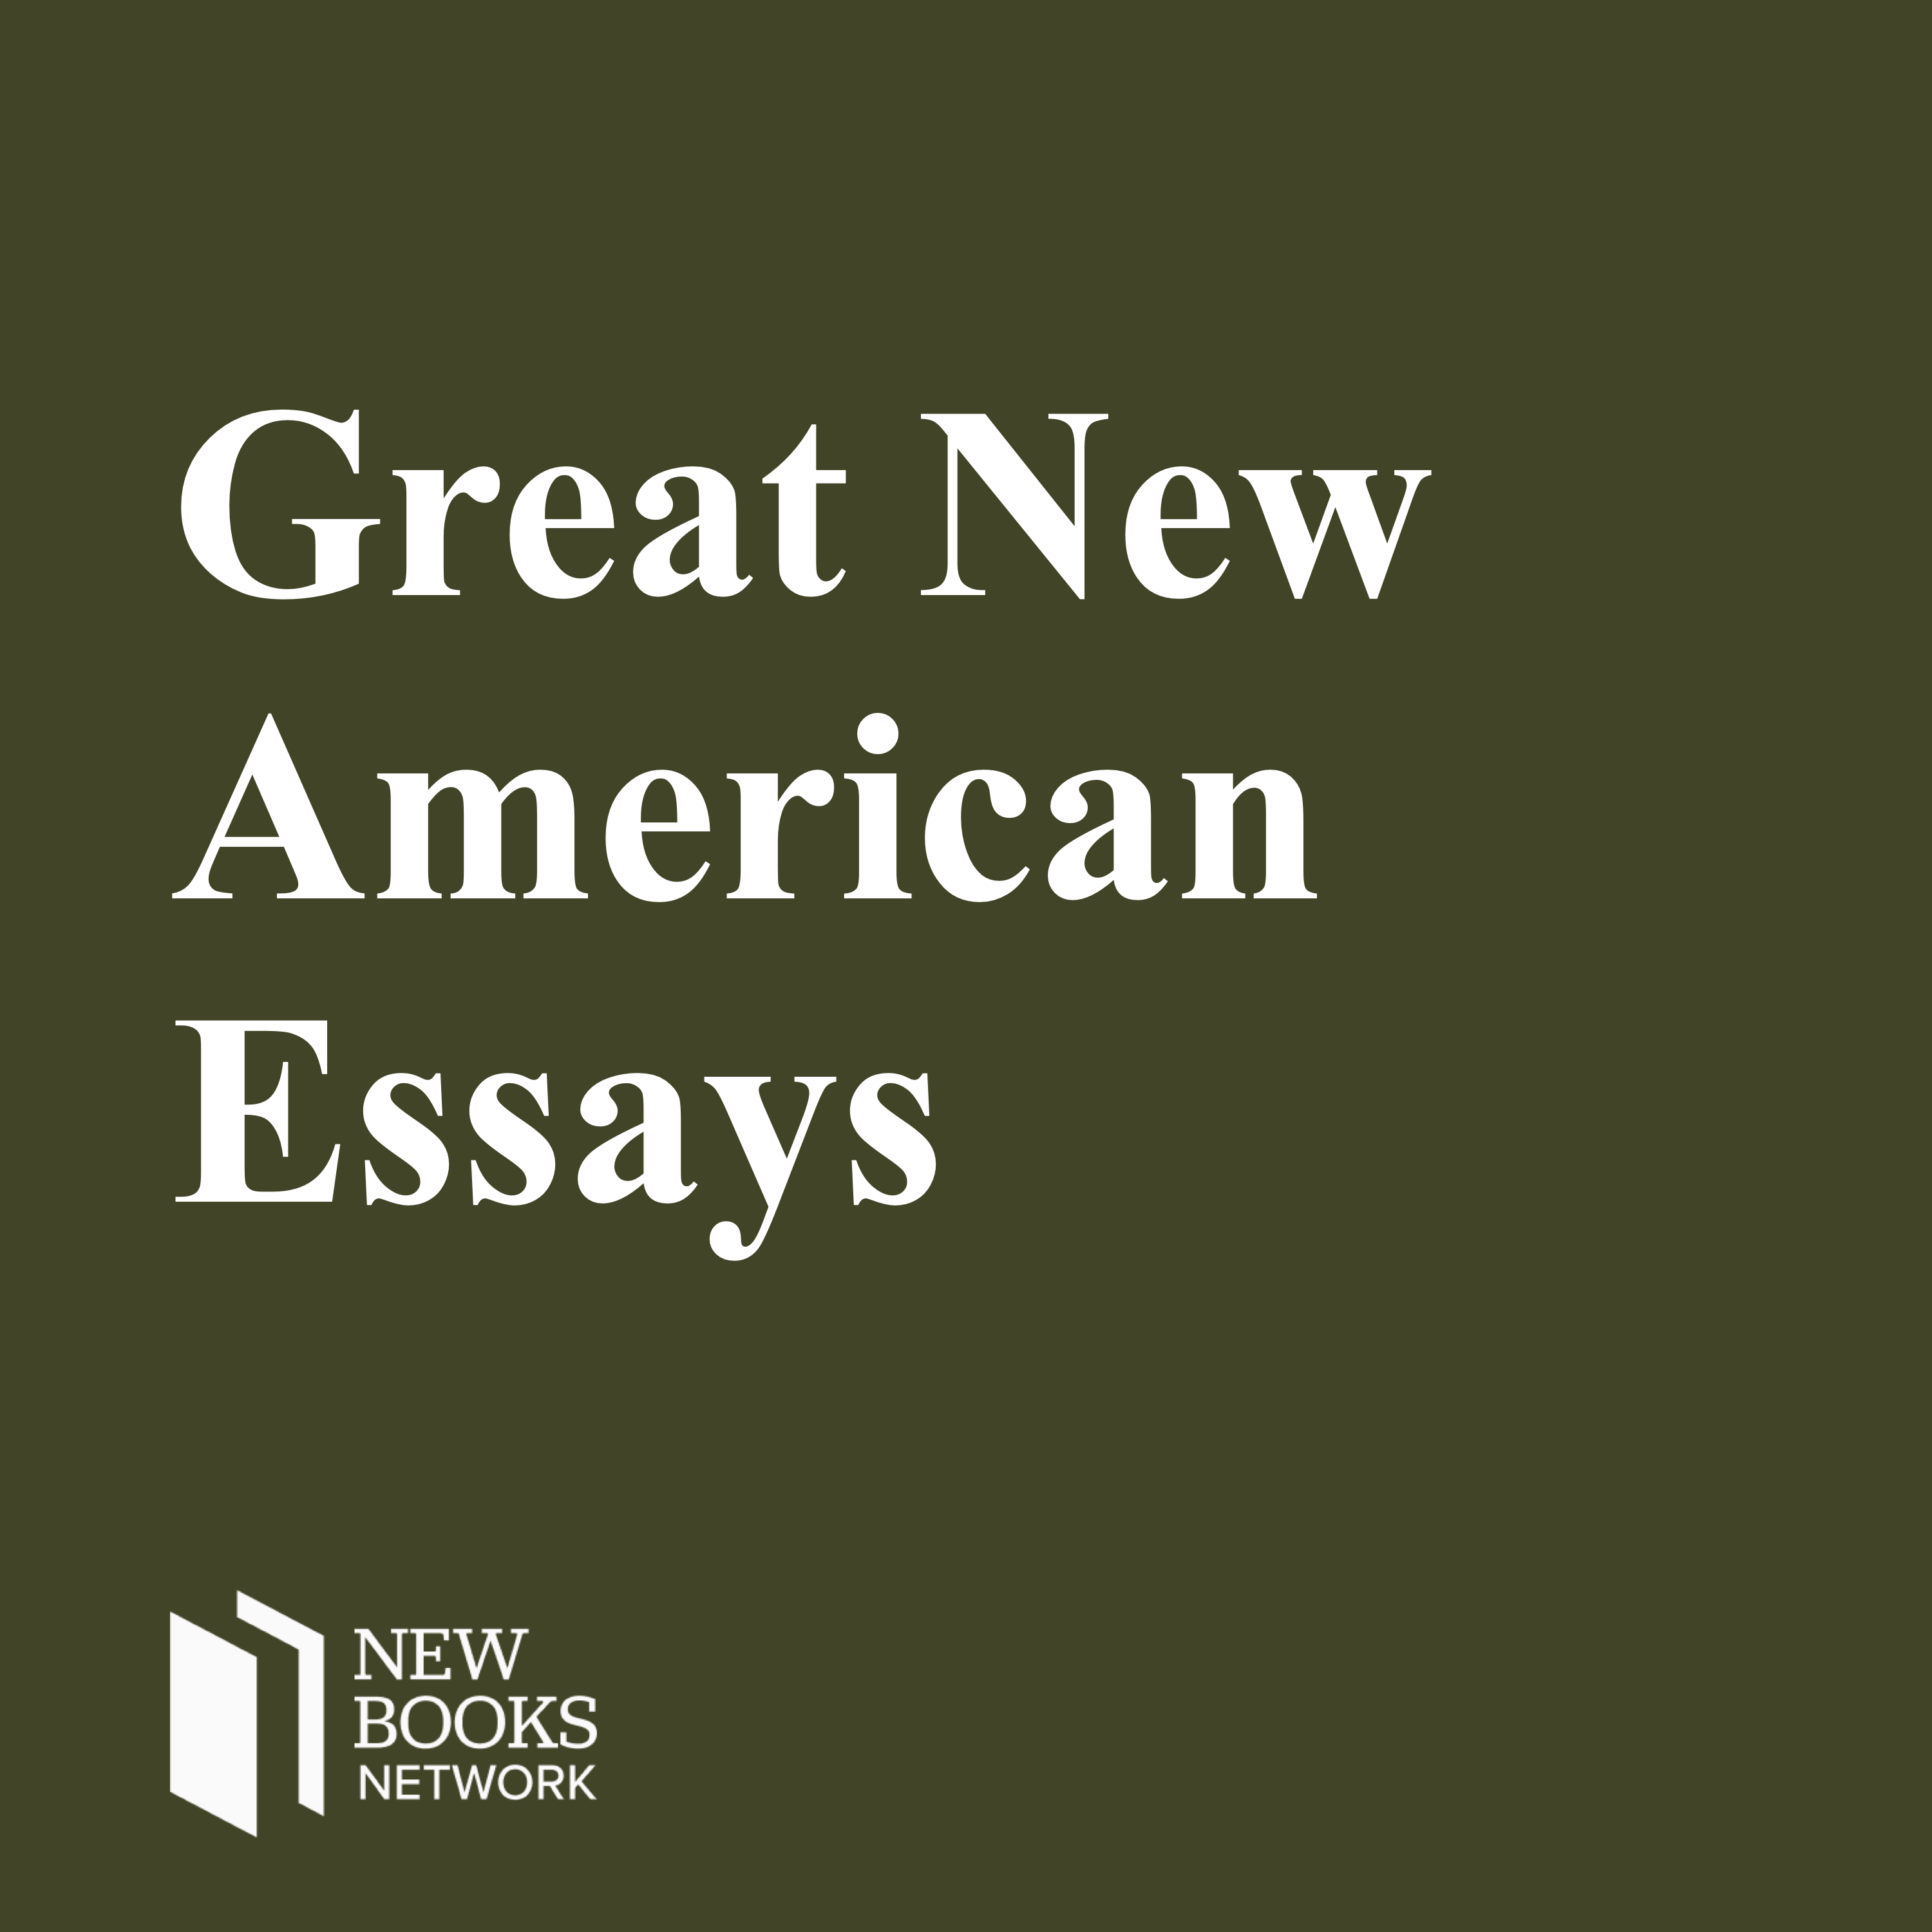 Great New American Essays